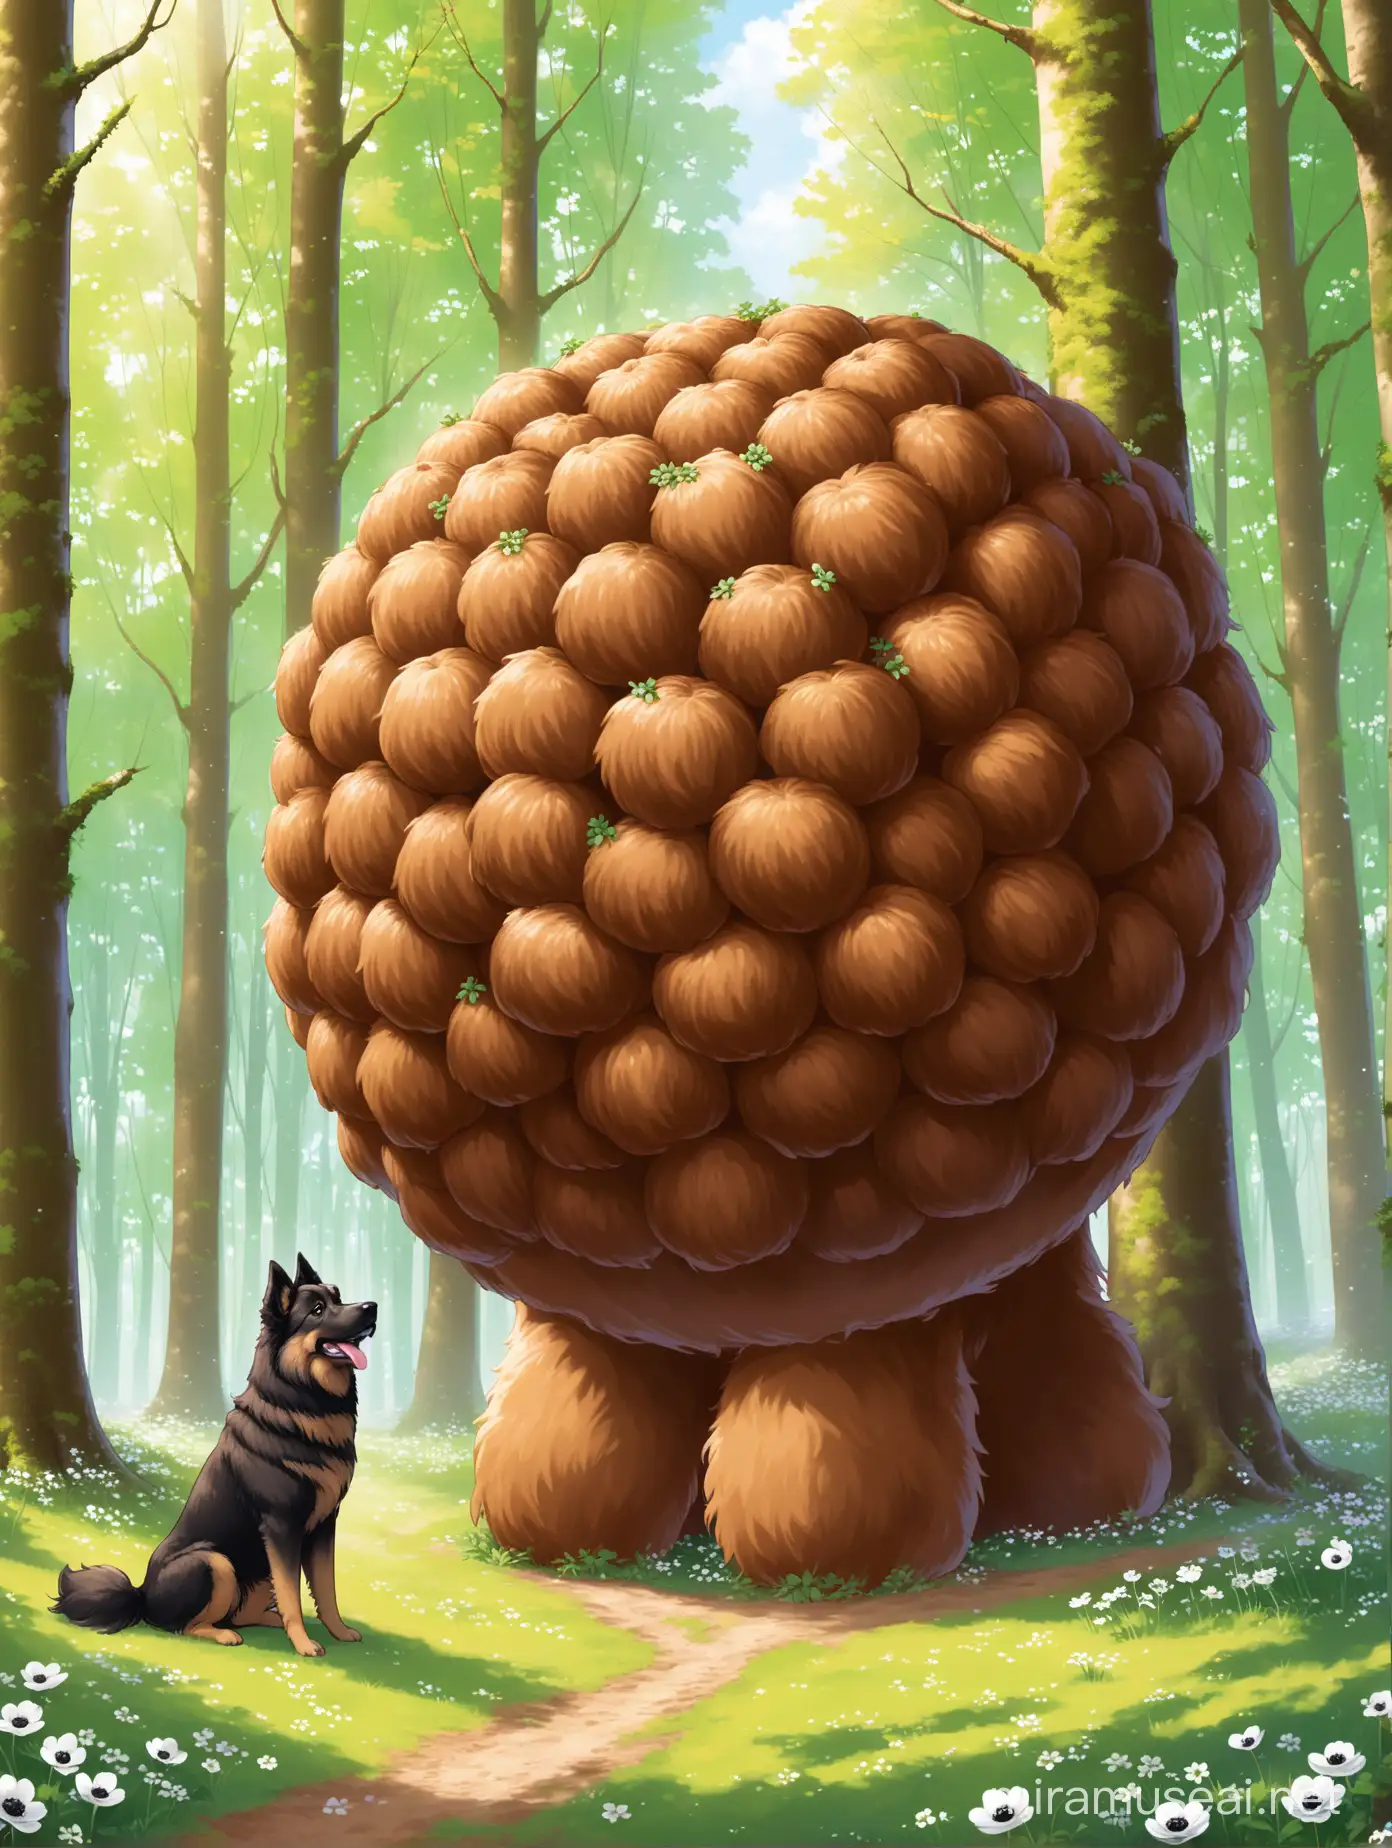 Joyful Belgian Tervuren Dog Discovers Gigantic Meatball in Enchanting Spring Forest